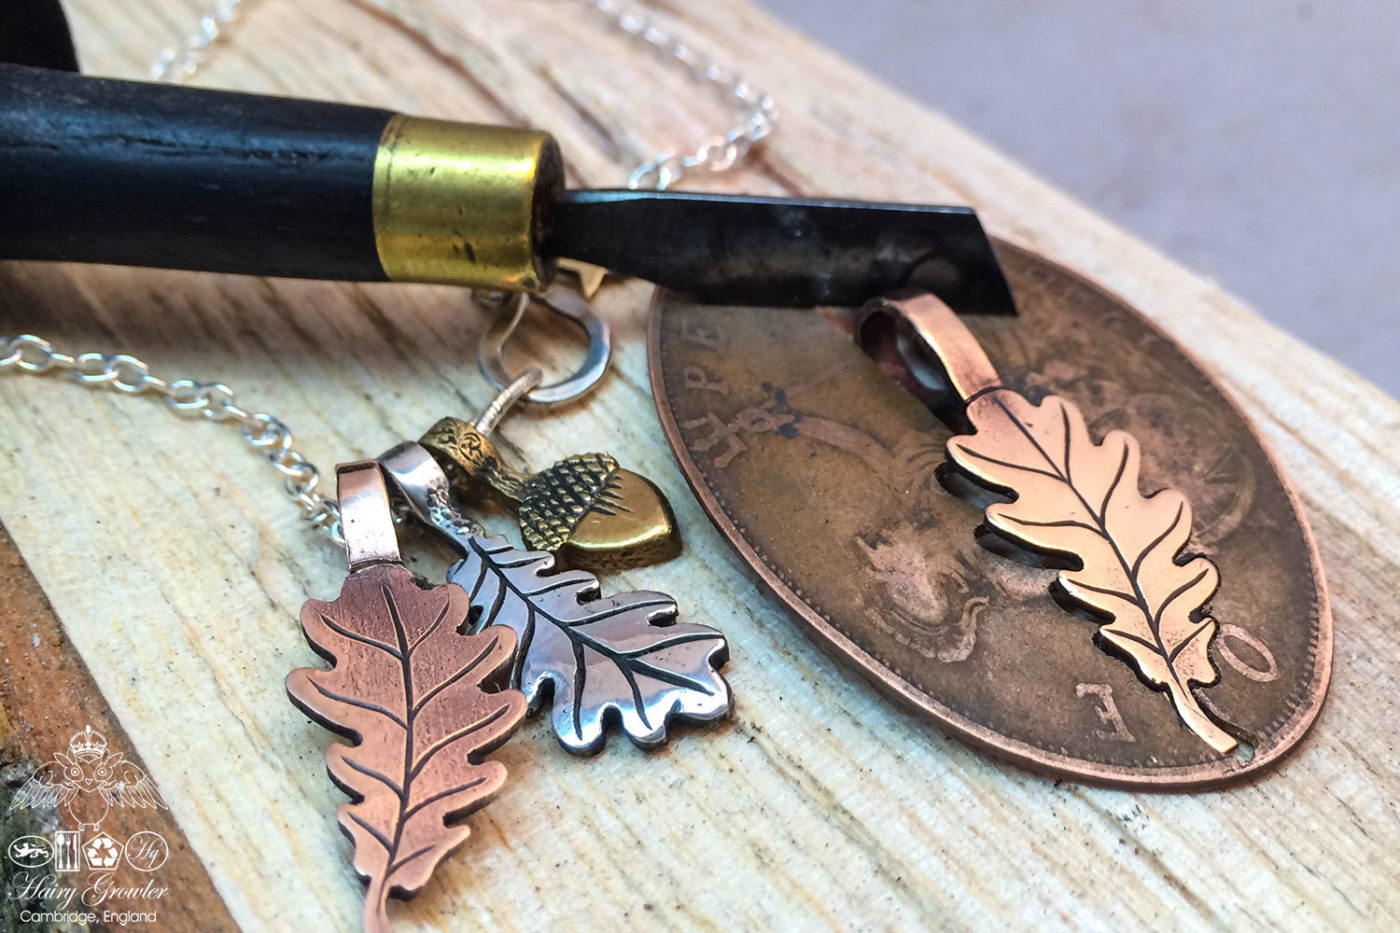 handcrafted copper4 oak leaf charm for a tree sculpture, necklace or bracelet